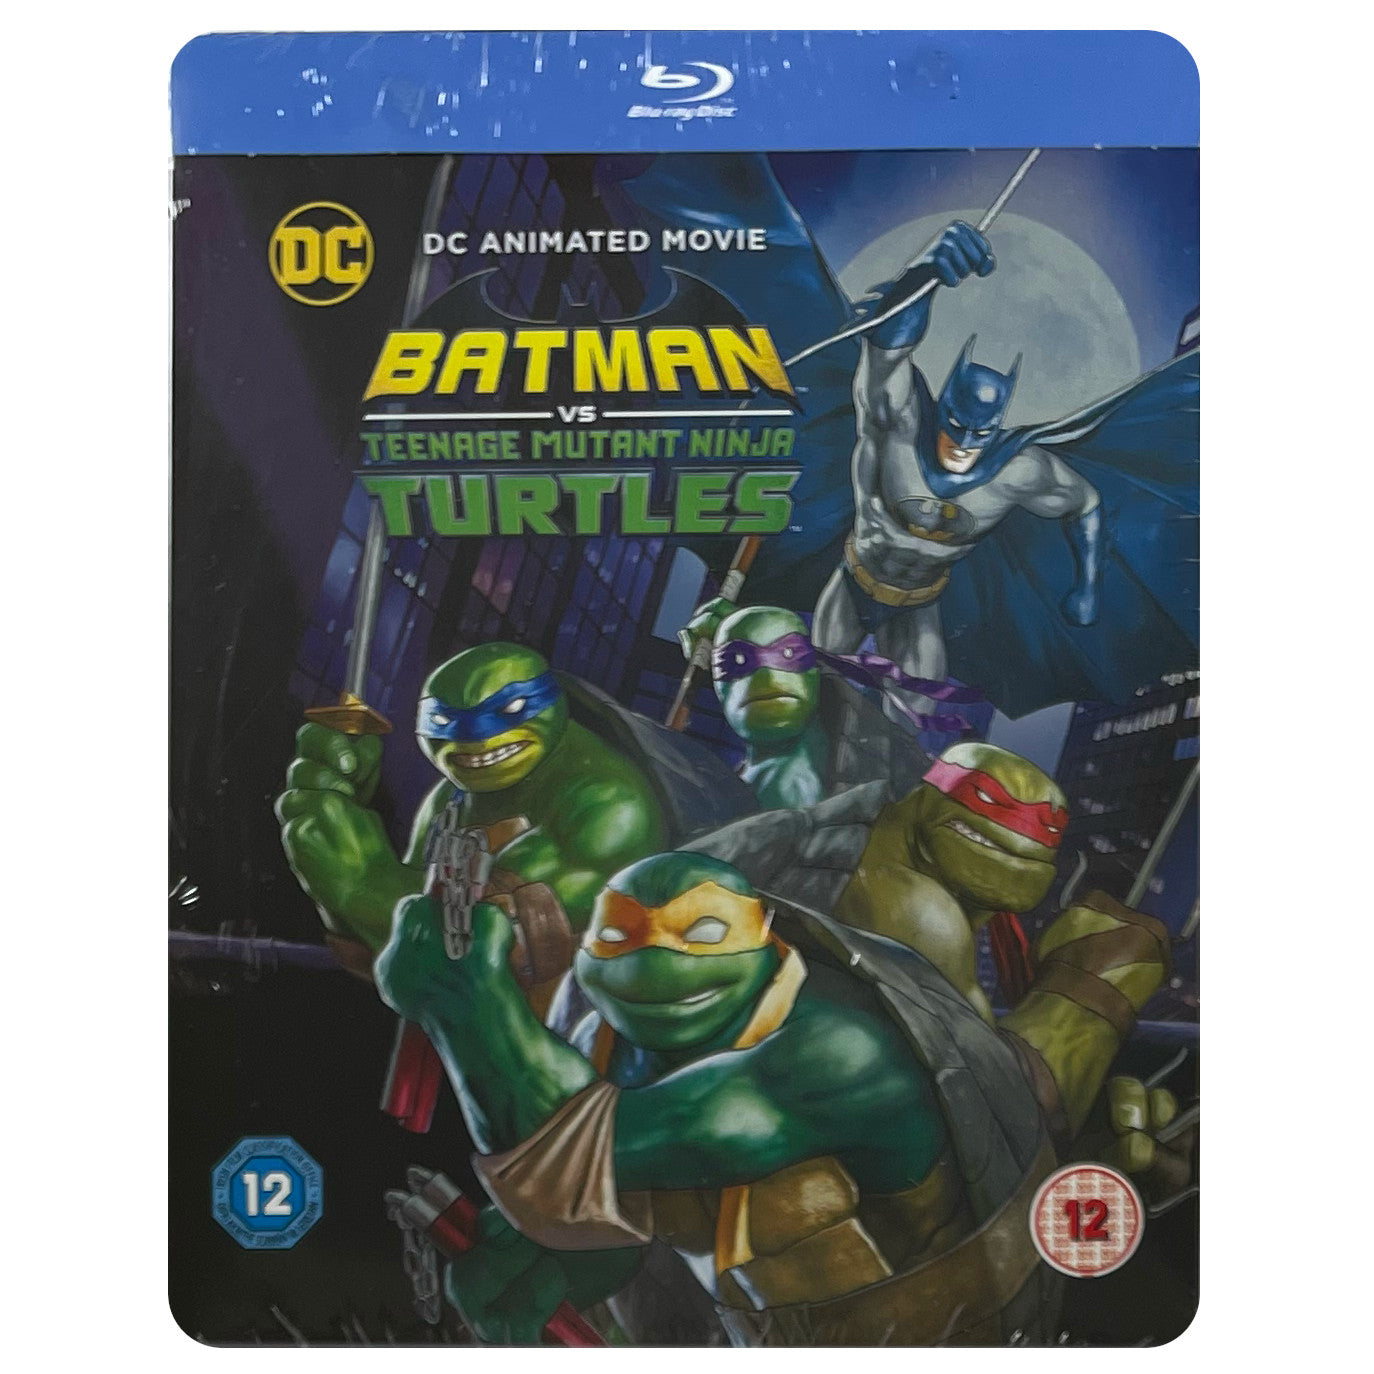 Batman vs. Teenage Mutant Ninja Turtles Blu-Ray  Steelbook